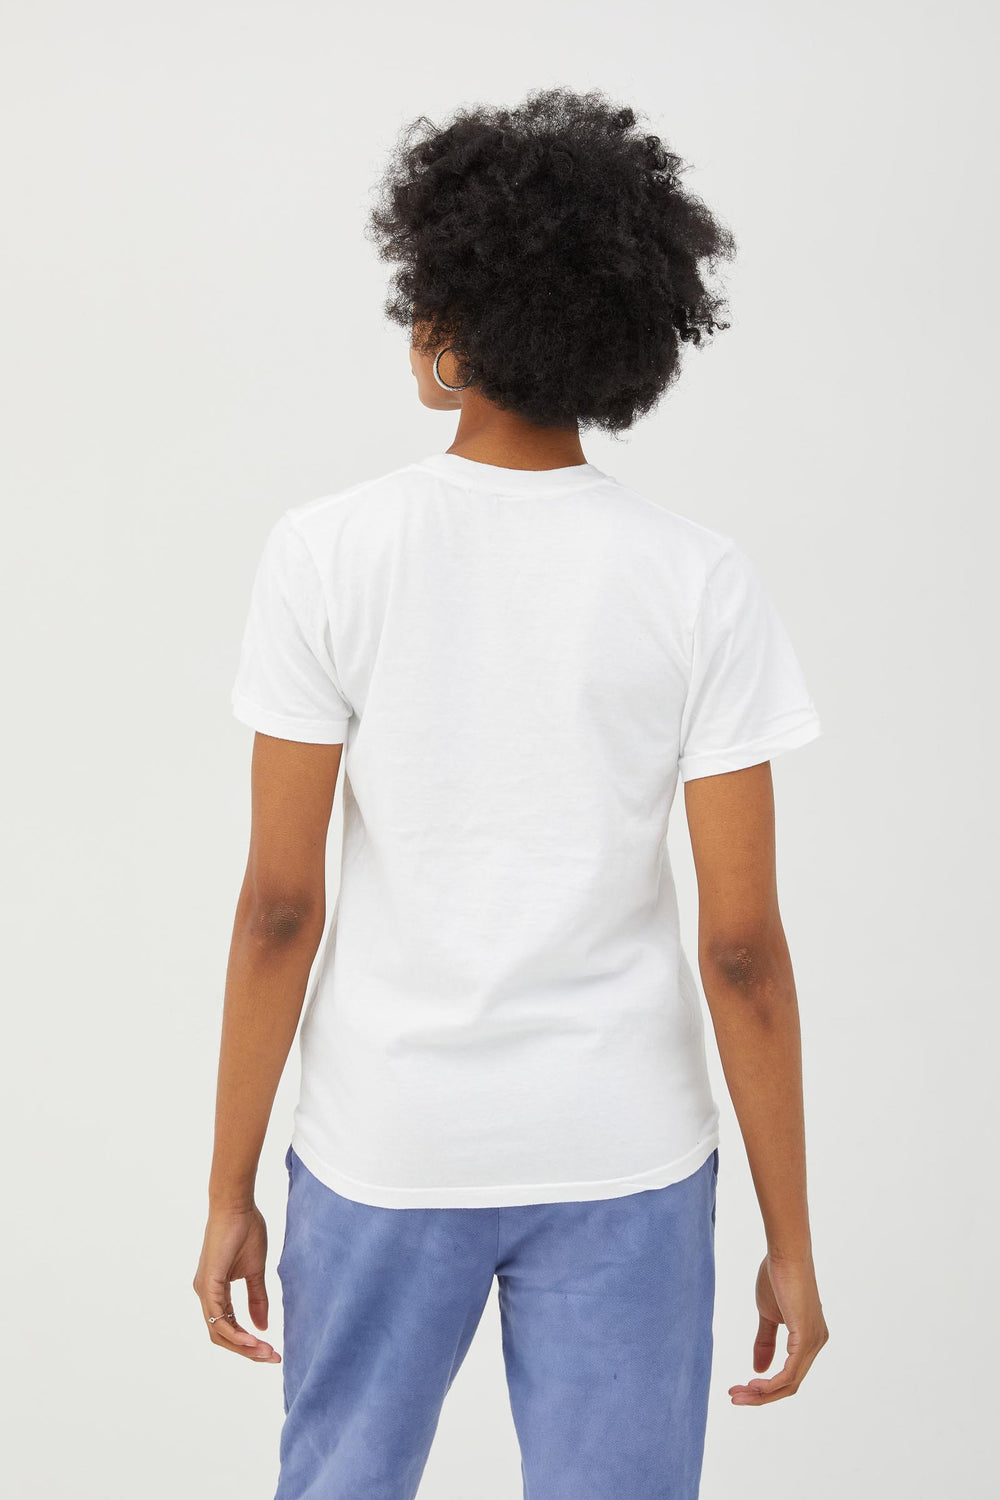 Custom White T-shirt